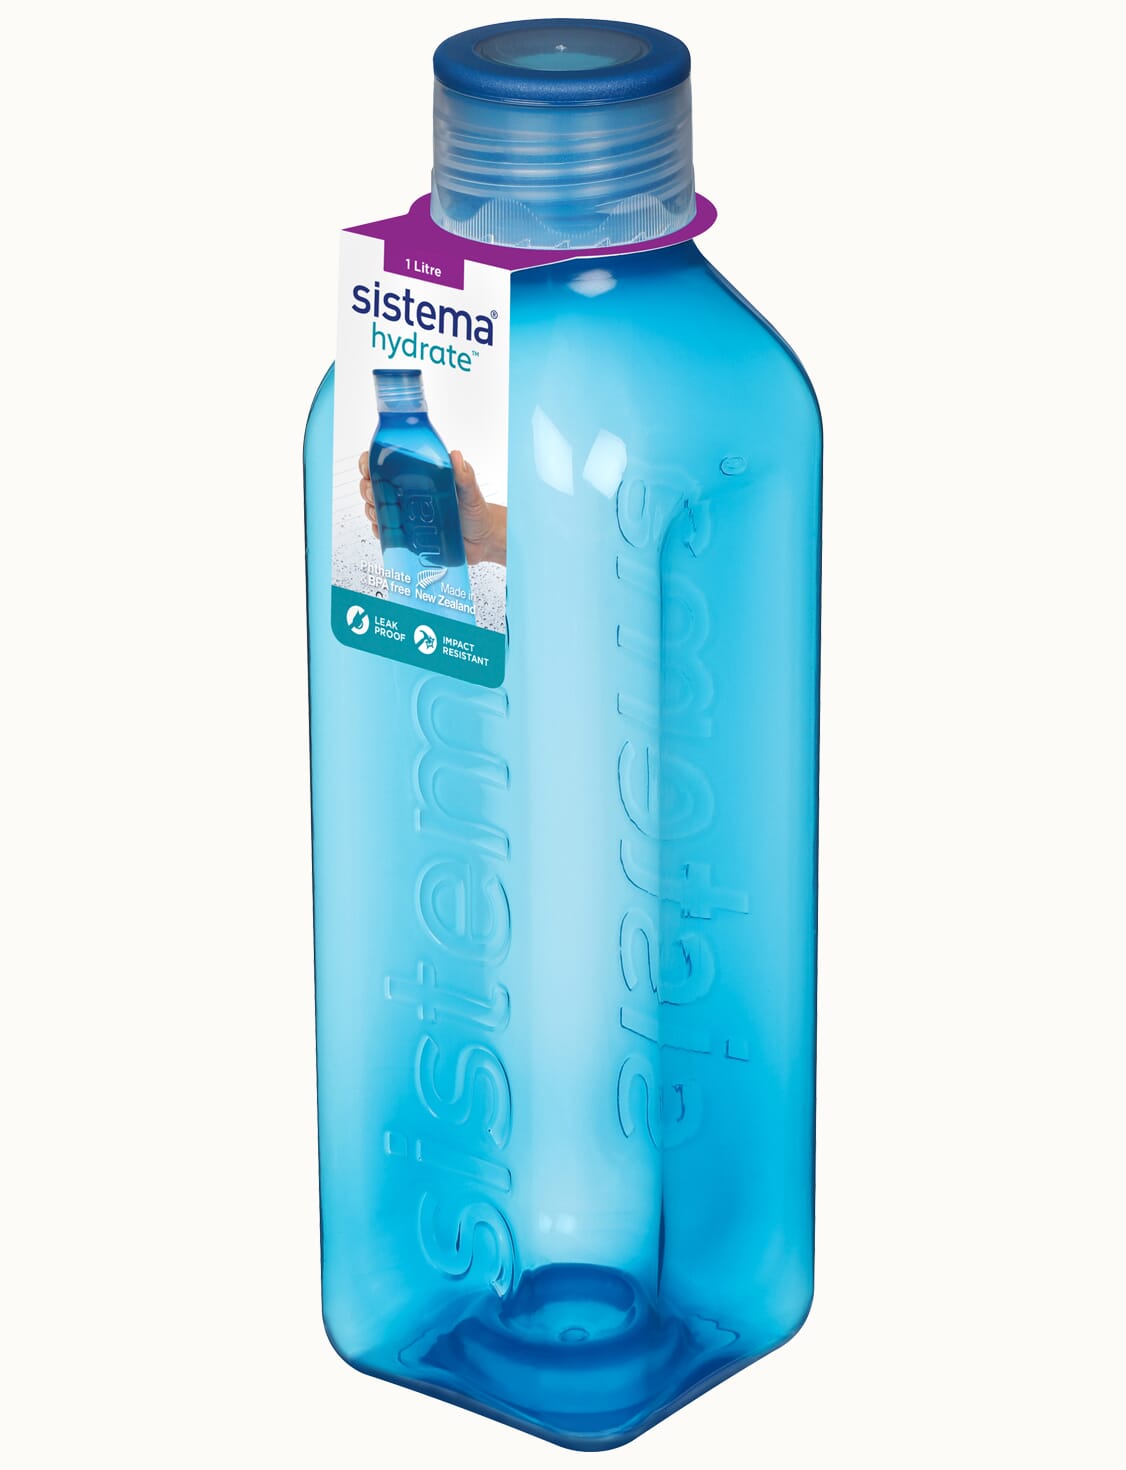 2 pack 5-in-1 Multi Function Plastic Grip Bottle Opener- Easily